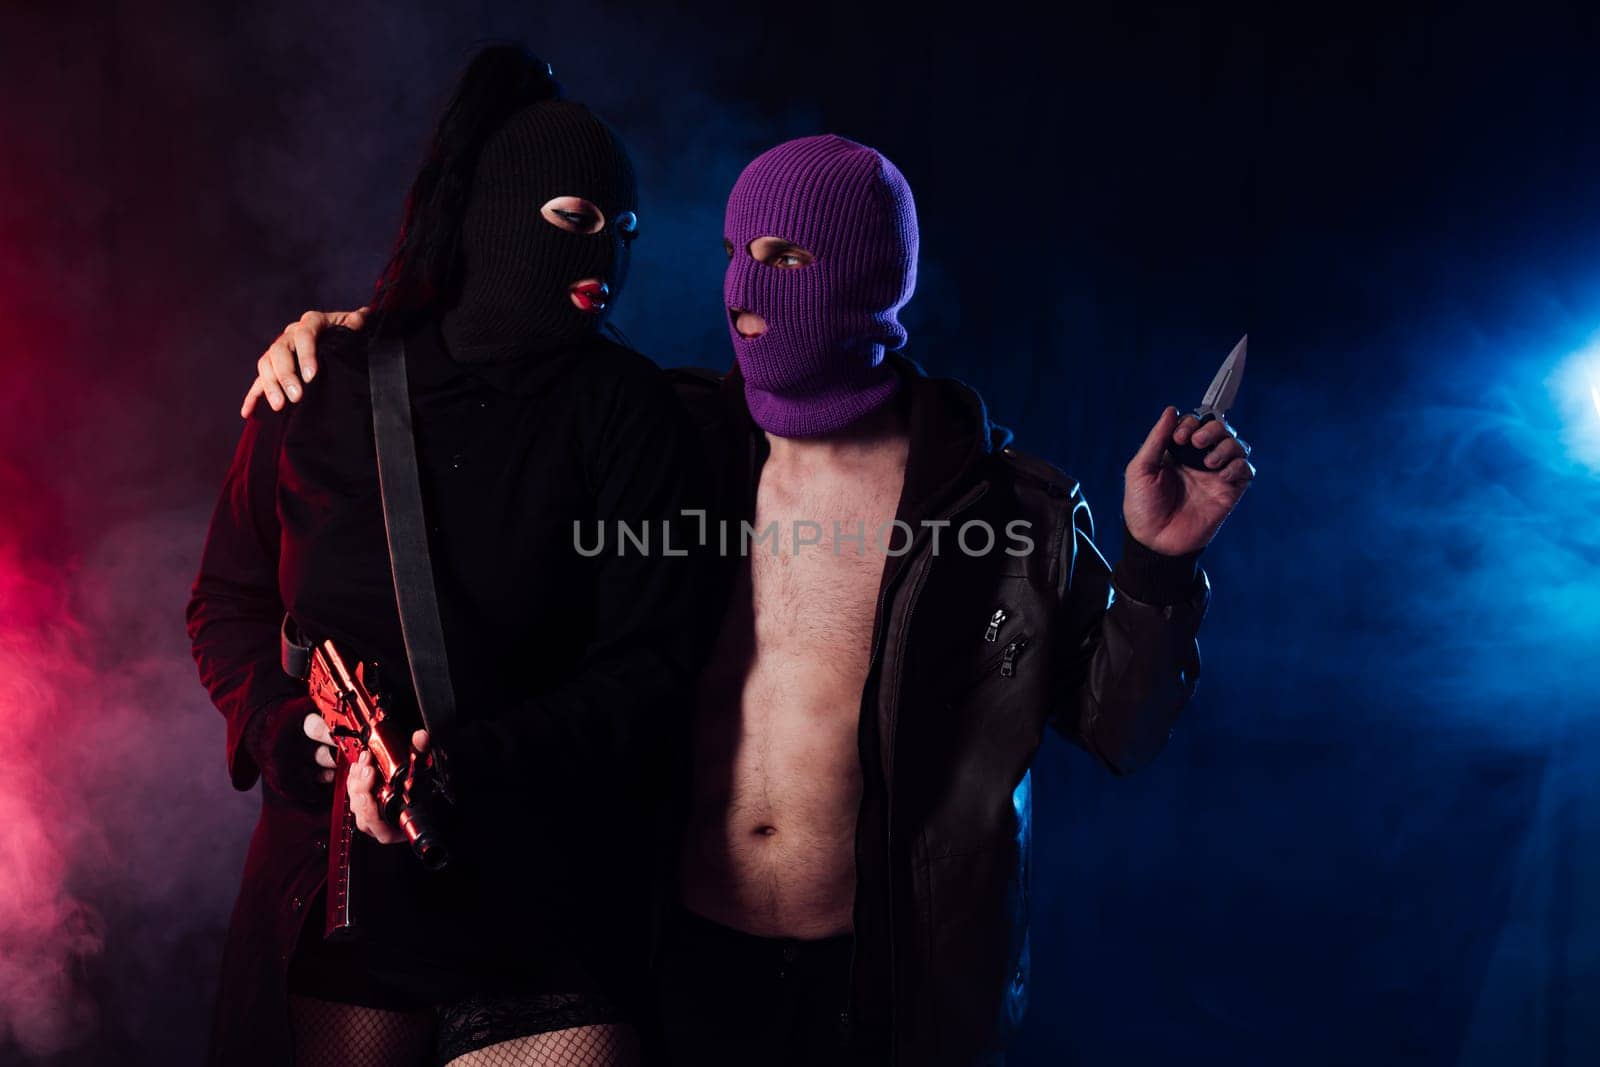 bandits with a machine gun in a dark room by Simakov